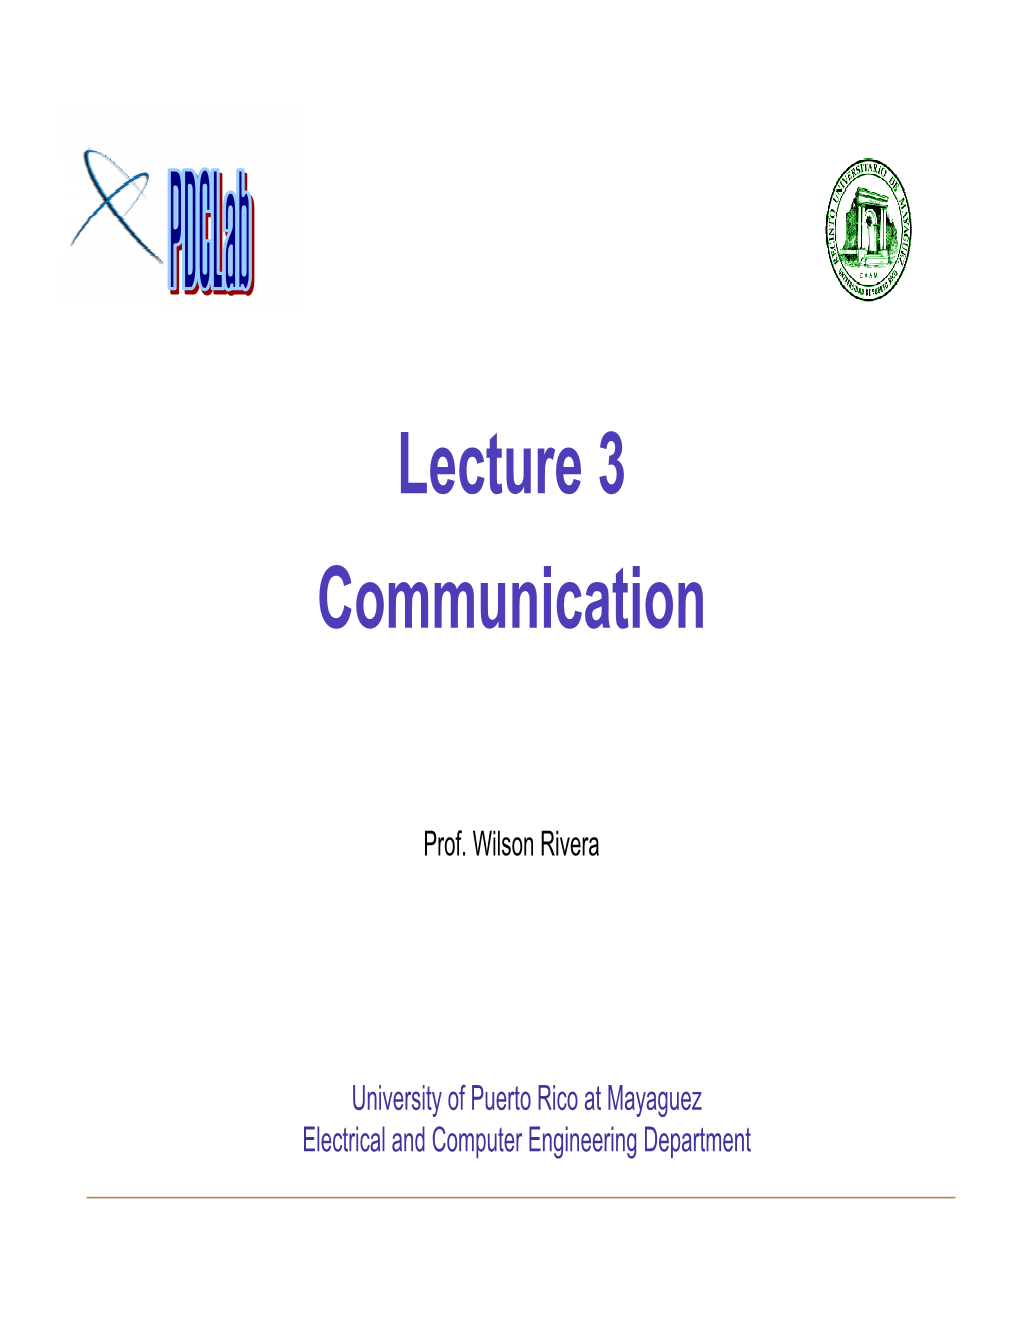 Lecture 3 Communication